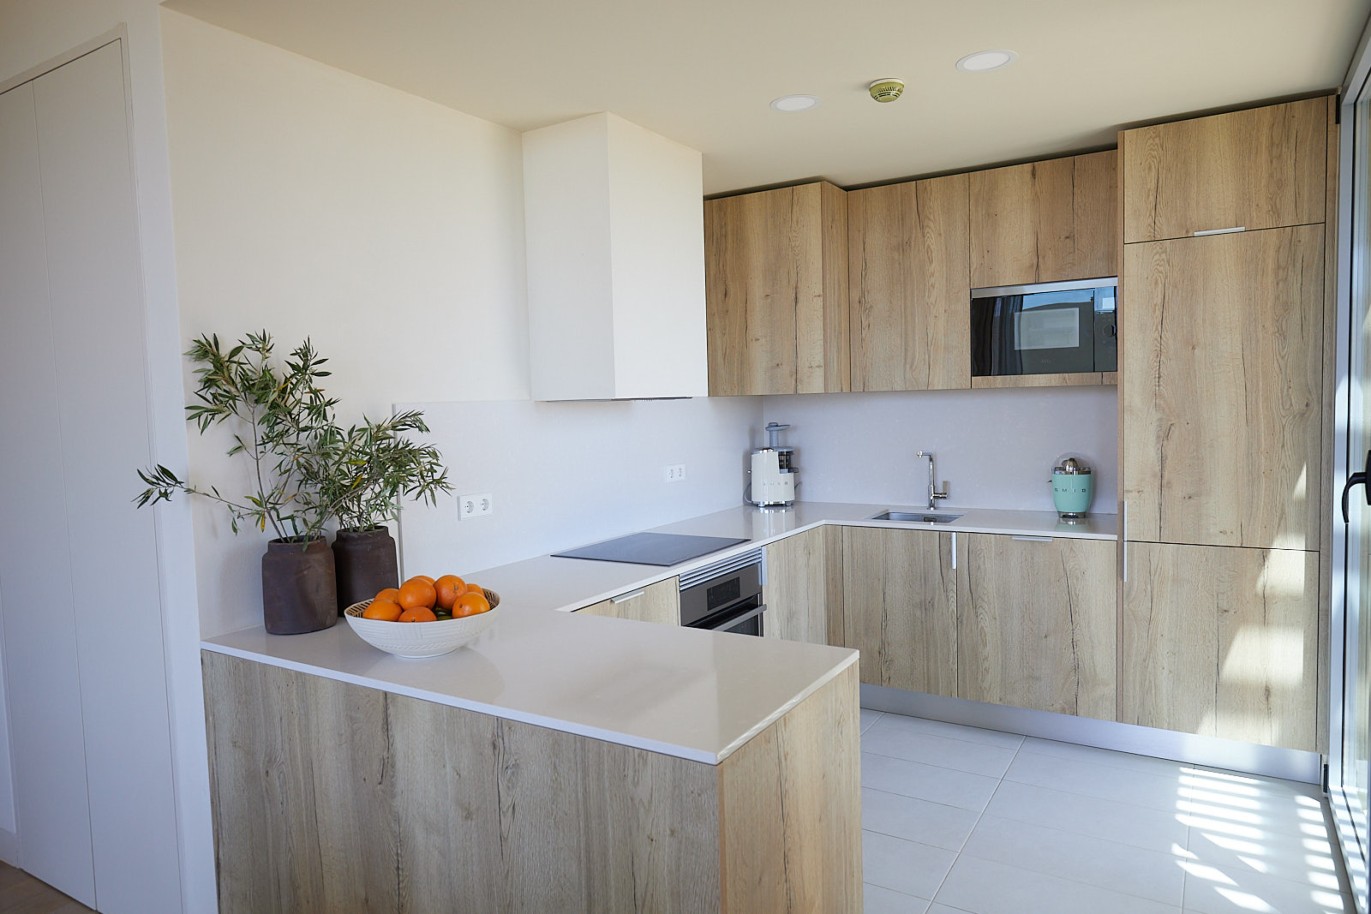 2 bedroom apartment in resort, for sale in Porches, Algarve_230785